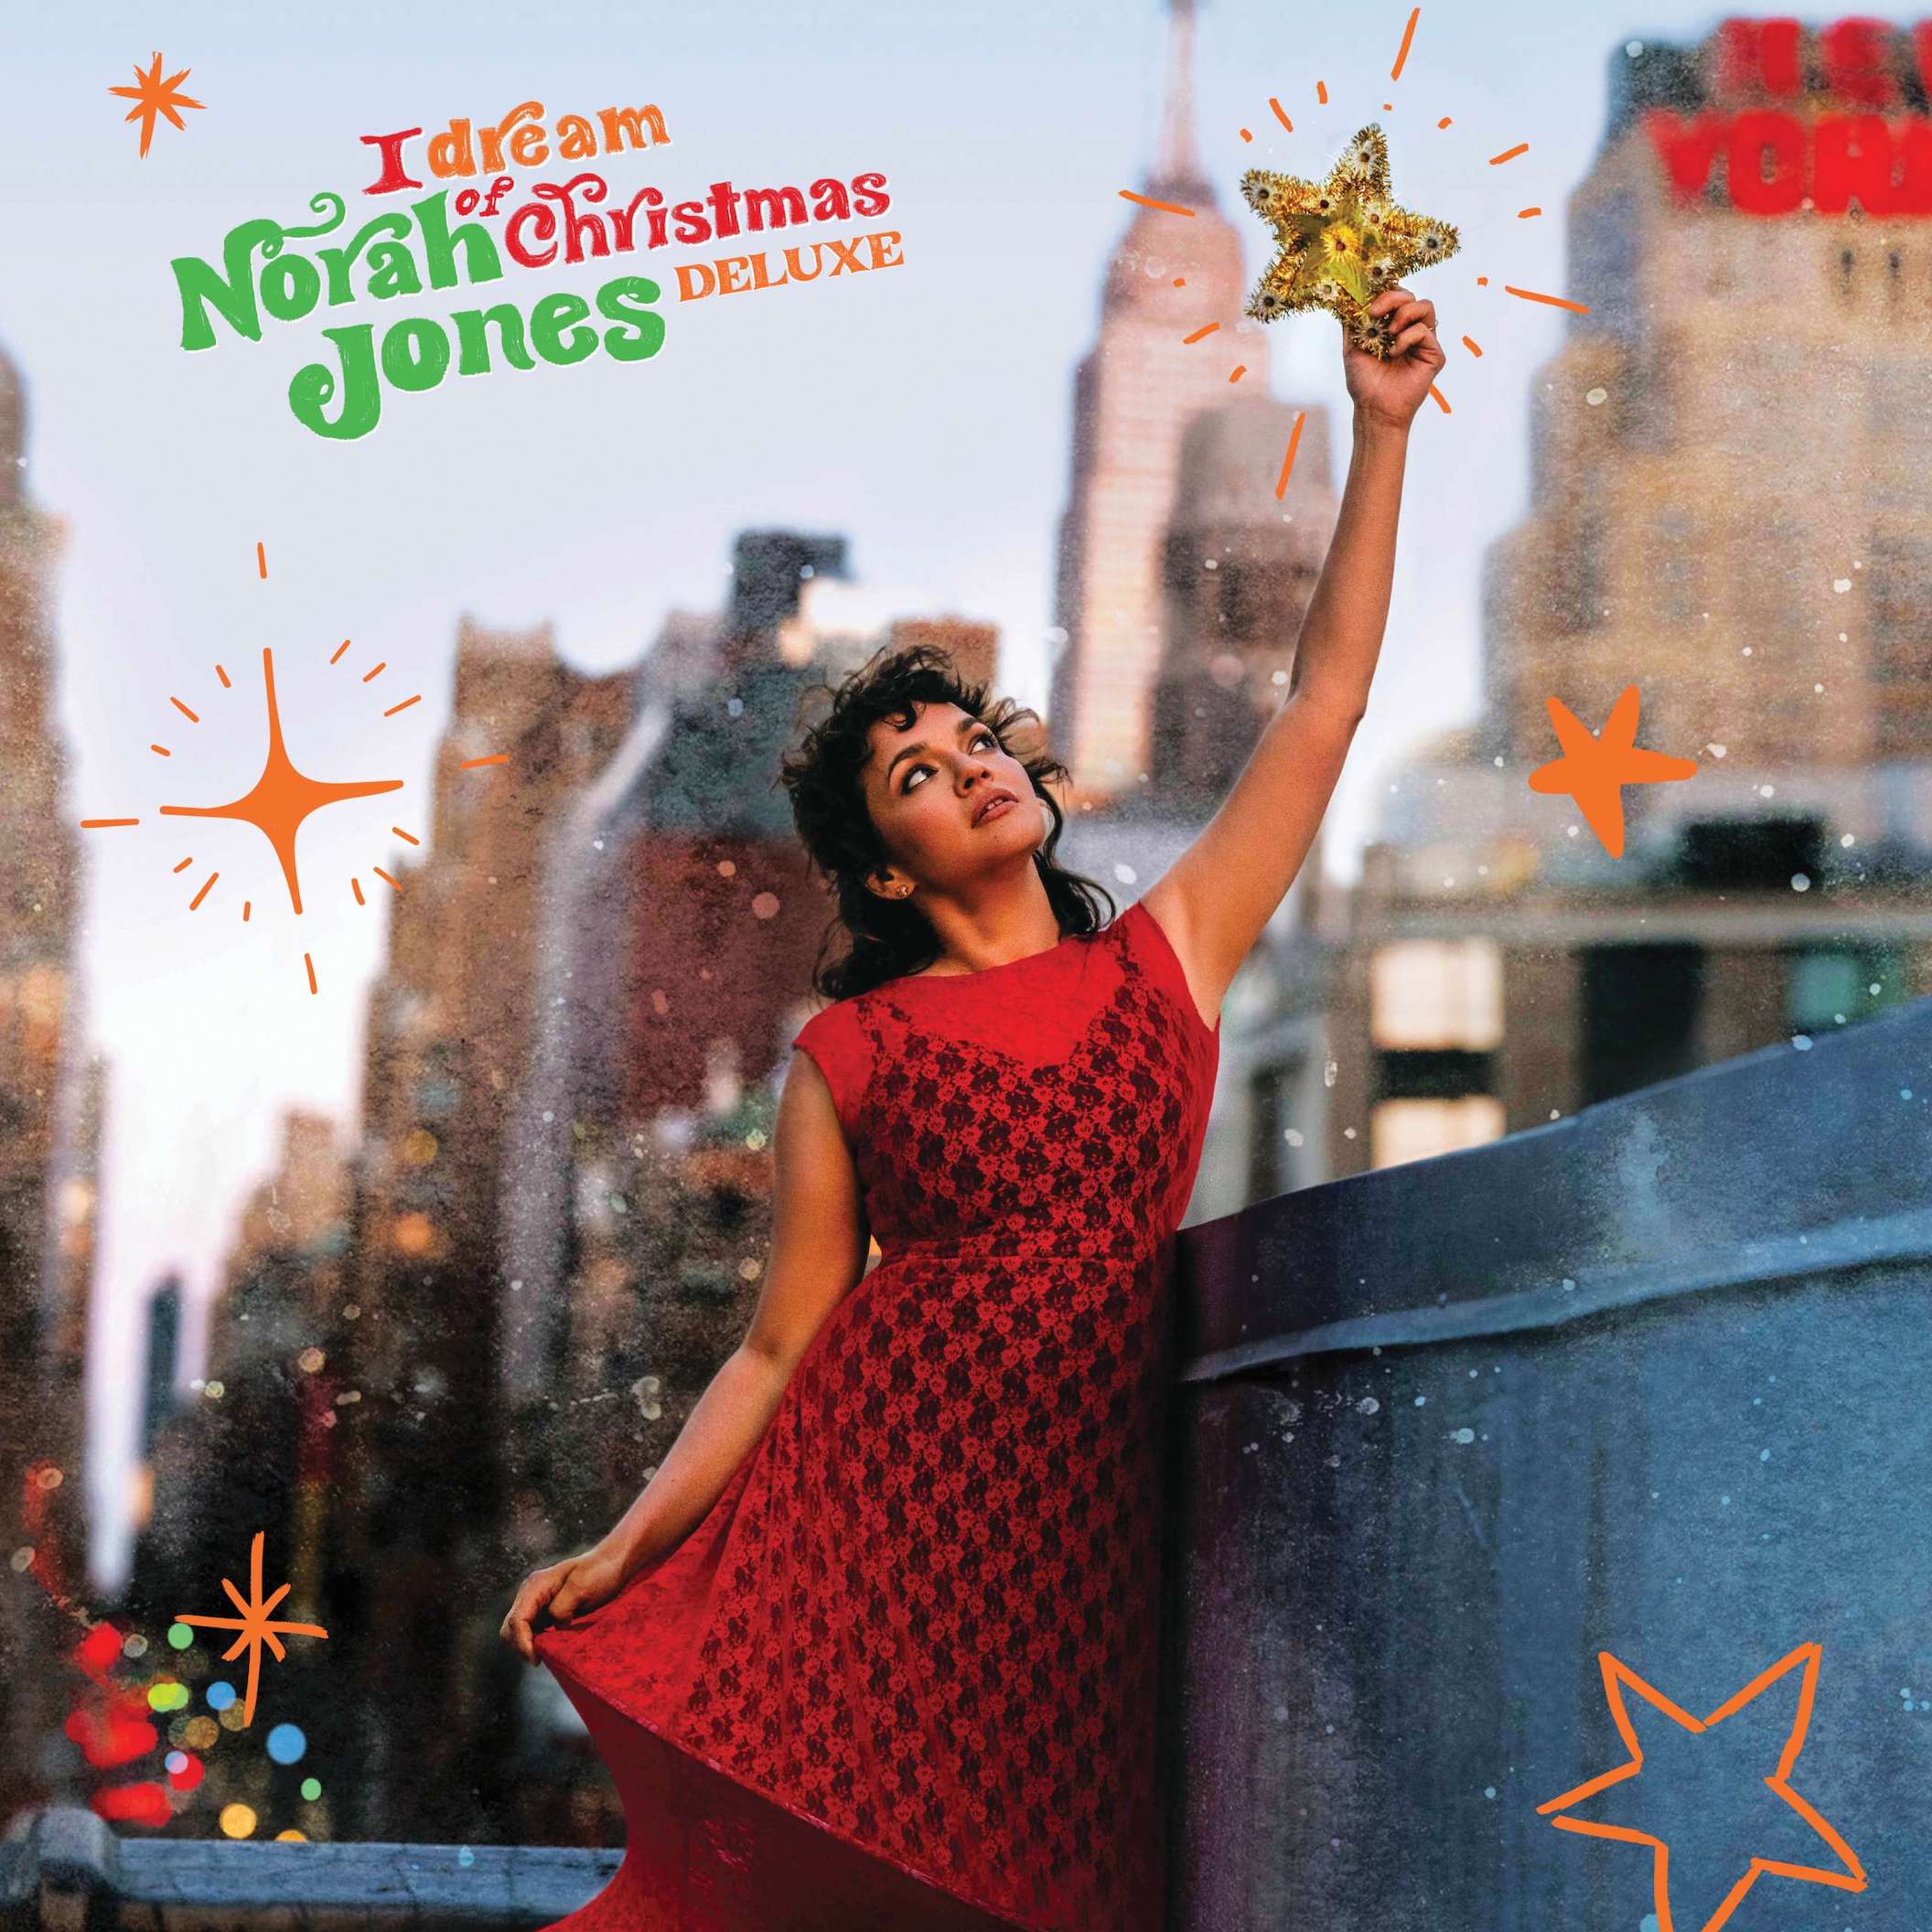 Norah Jones `I Dream Of Christmas (Deluxe)` cover art courtesy of Universal Music Group Canada